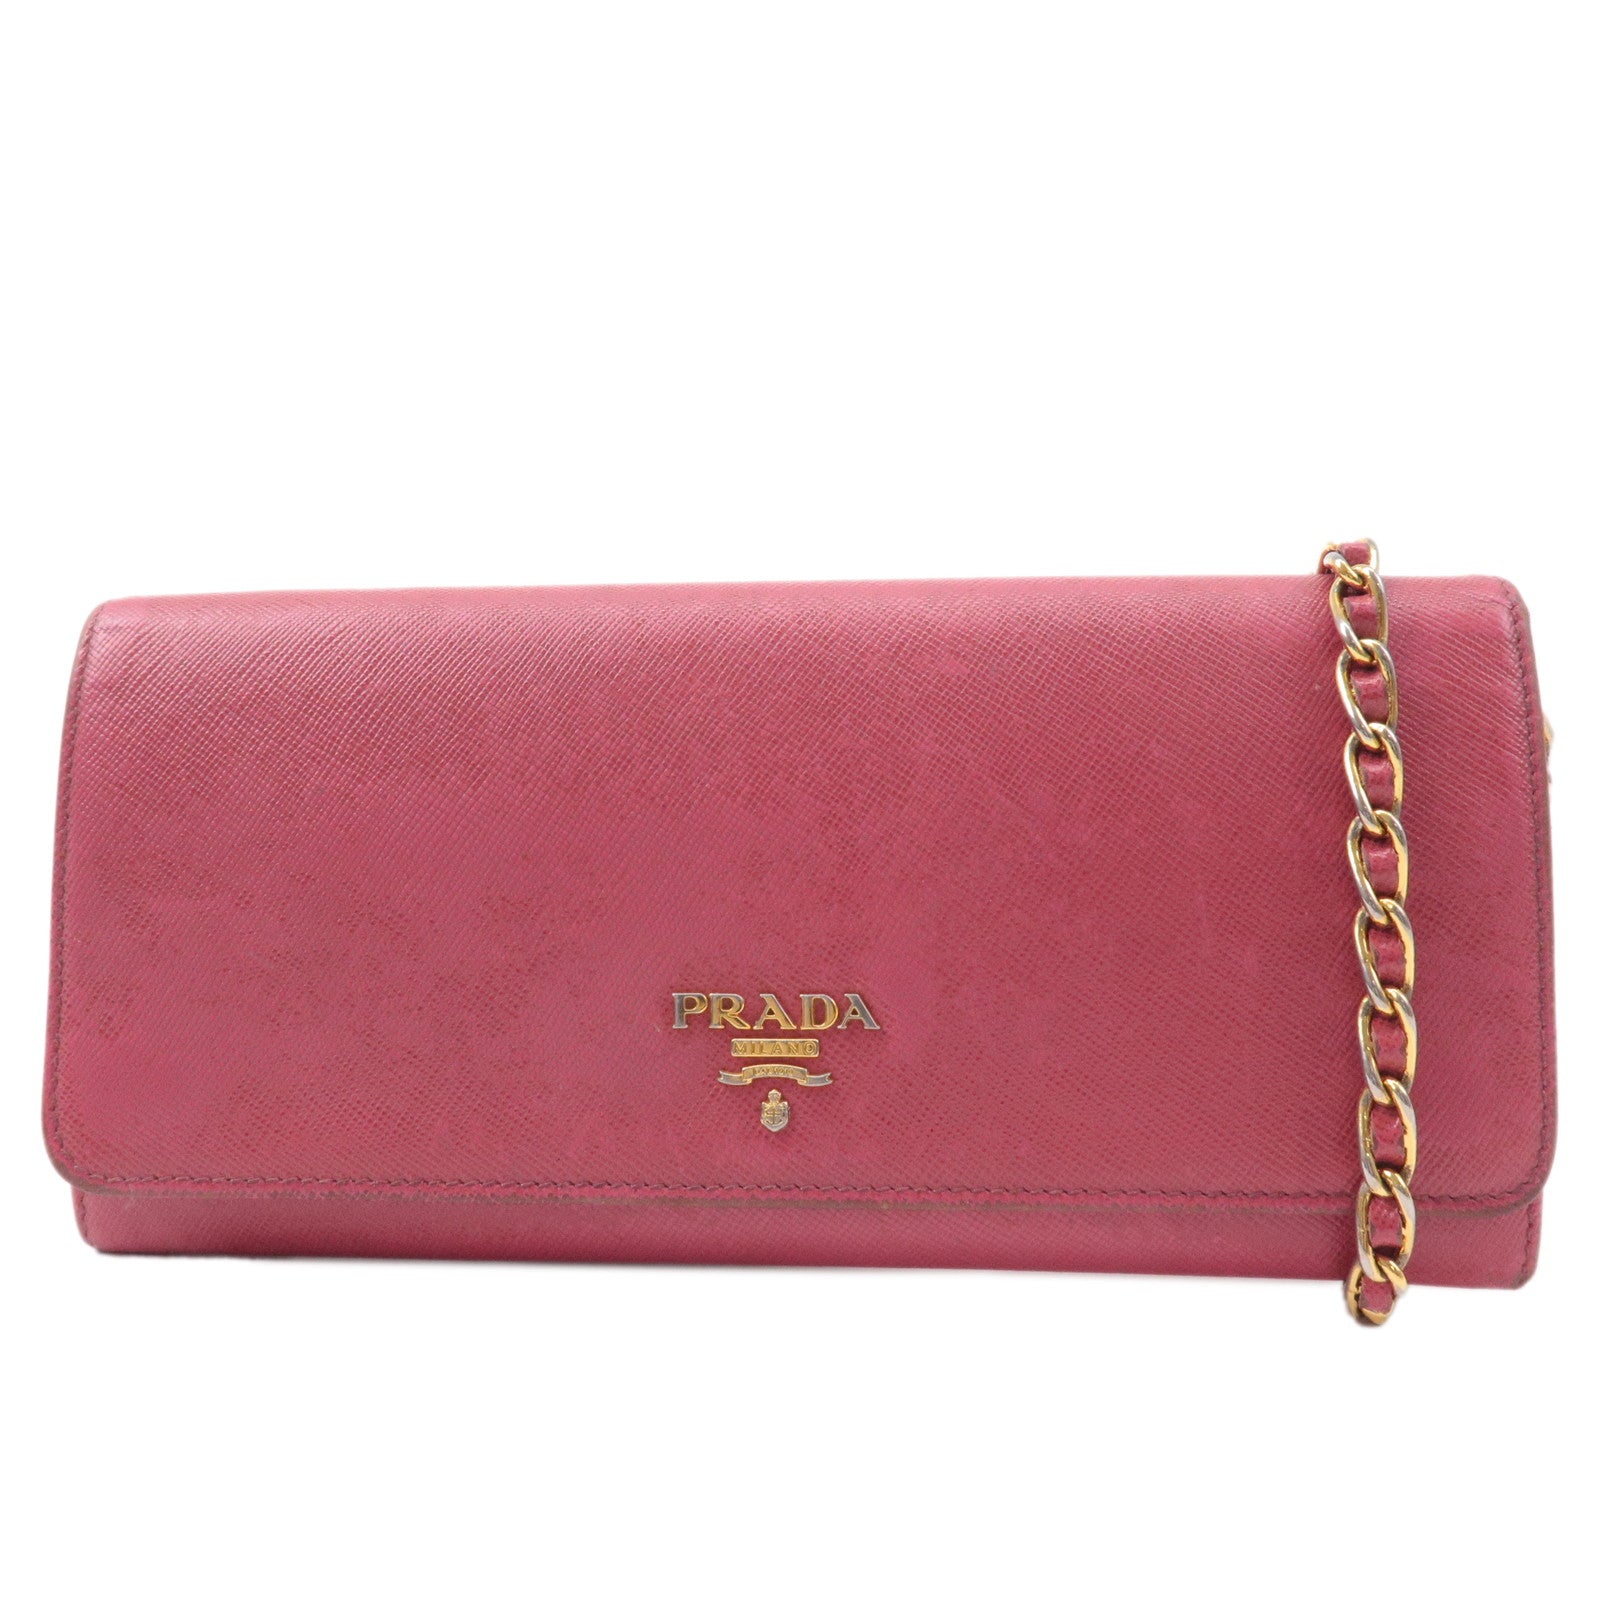 Prada Pink Saffiano Leather Wallet on Chain Prada